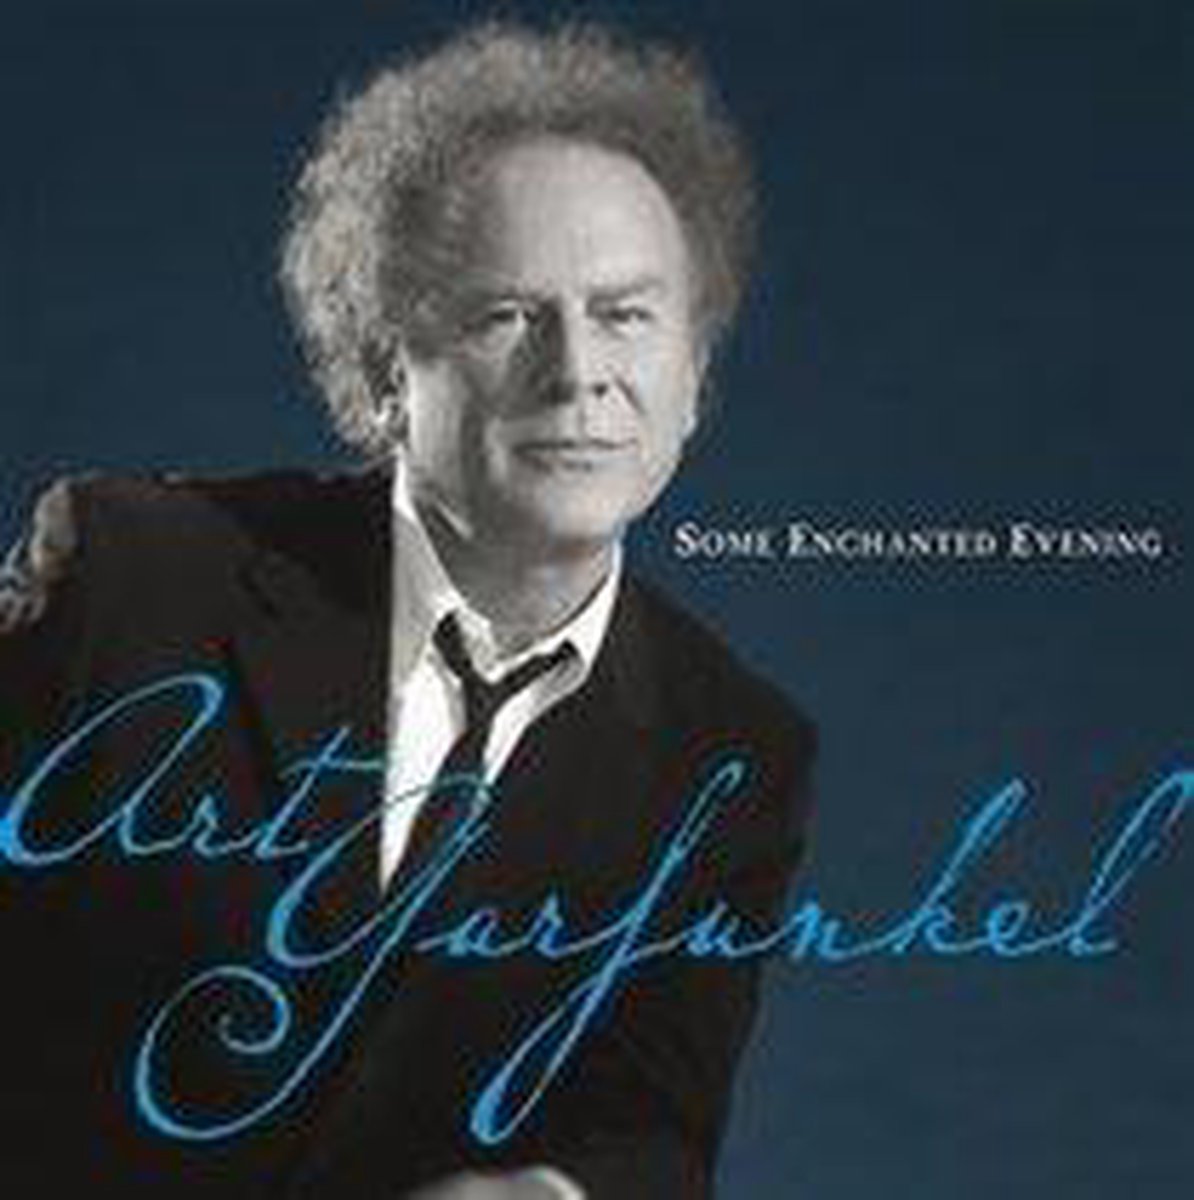 Some Enchanted Evening - Art Garfunkel